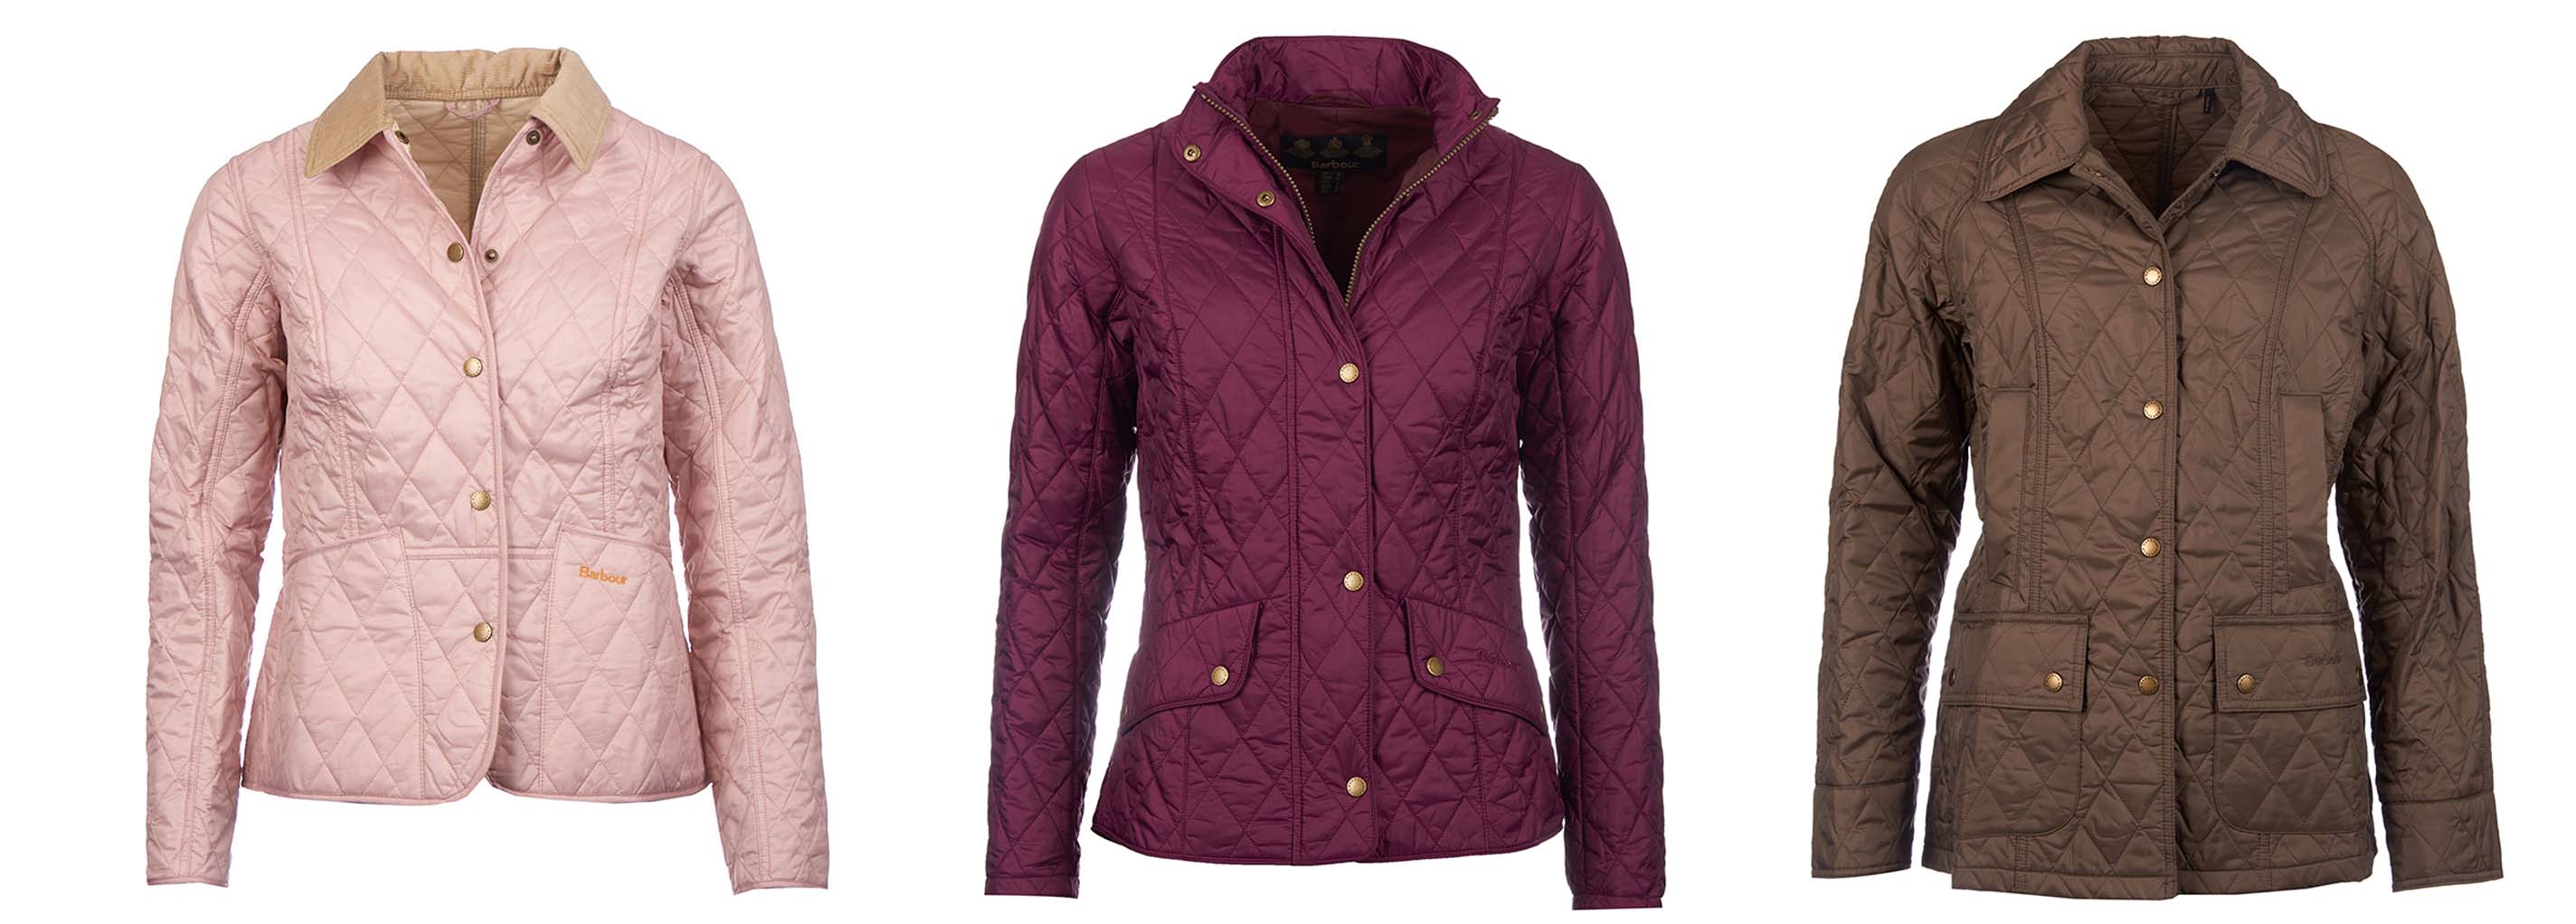 ladies barbour quilted jacket online -